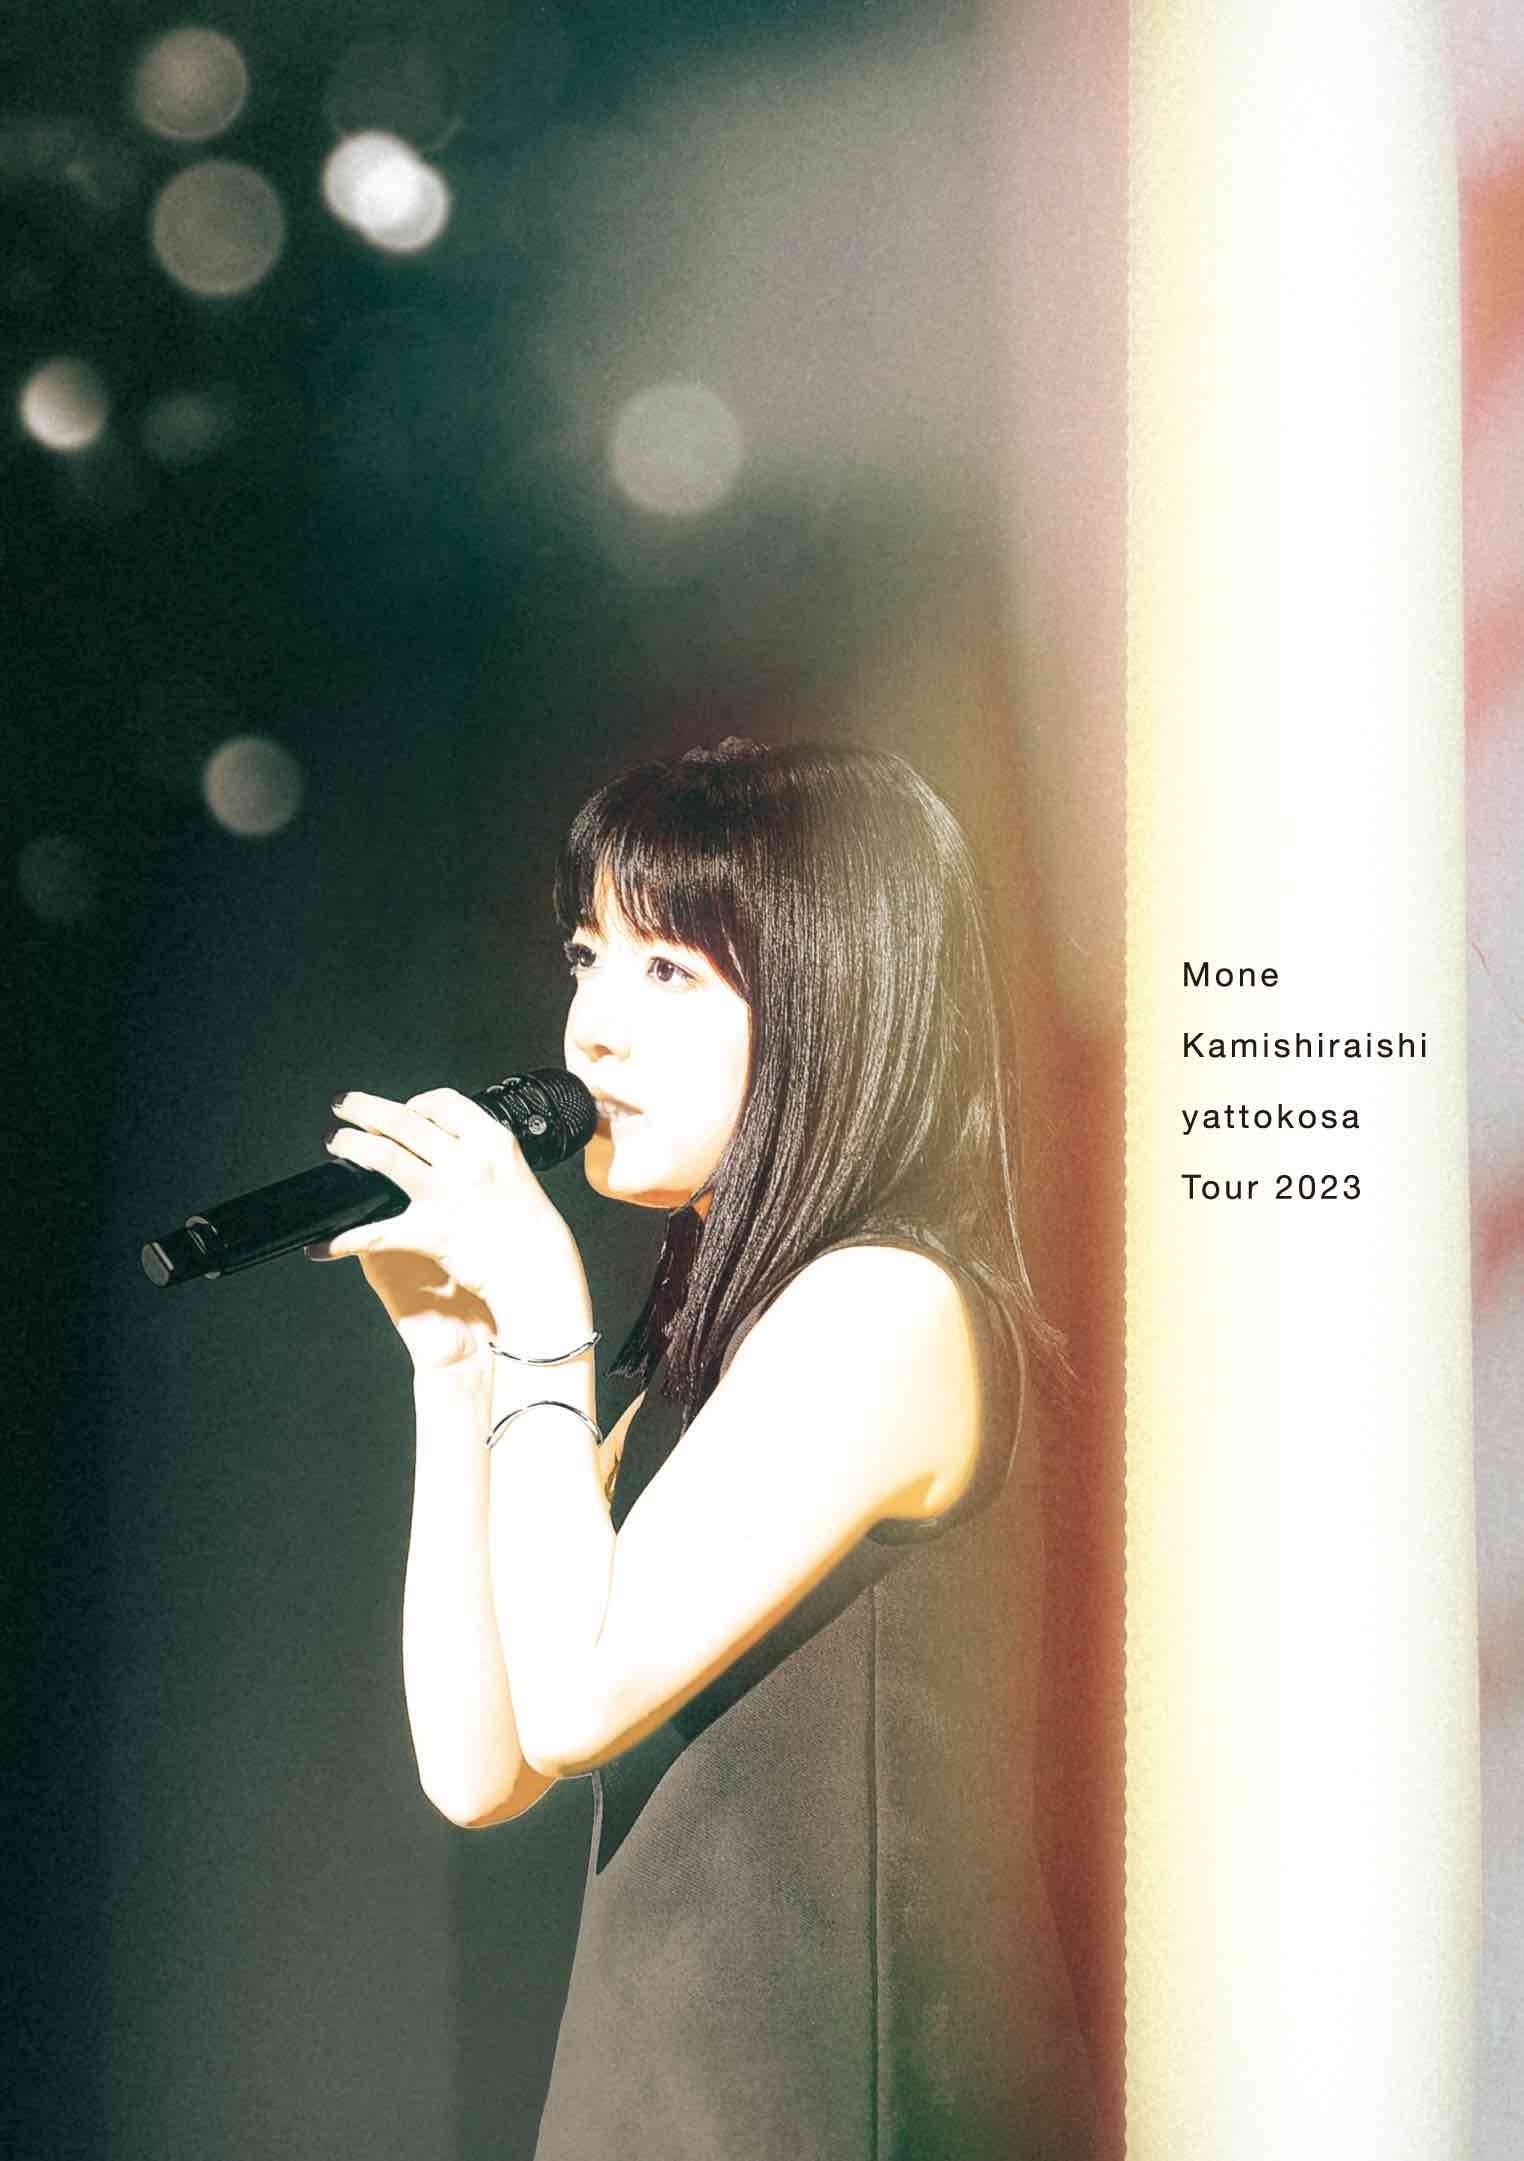 Mone Kamishiraishi 『yattokosa』 Tour 2023